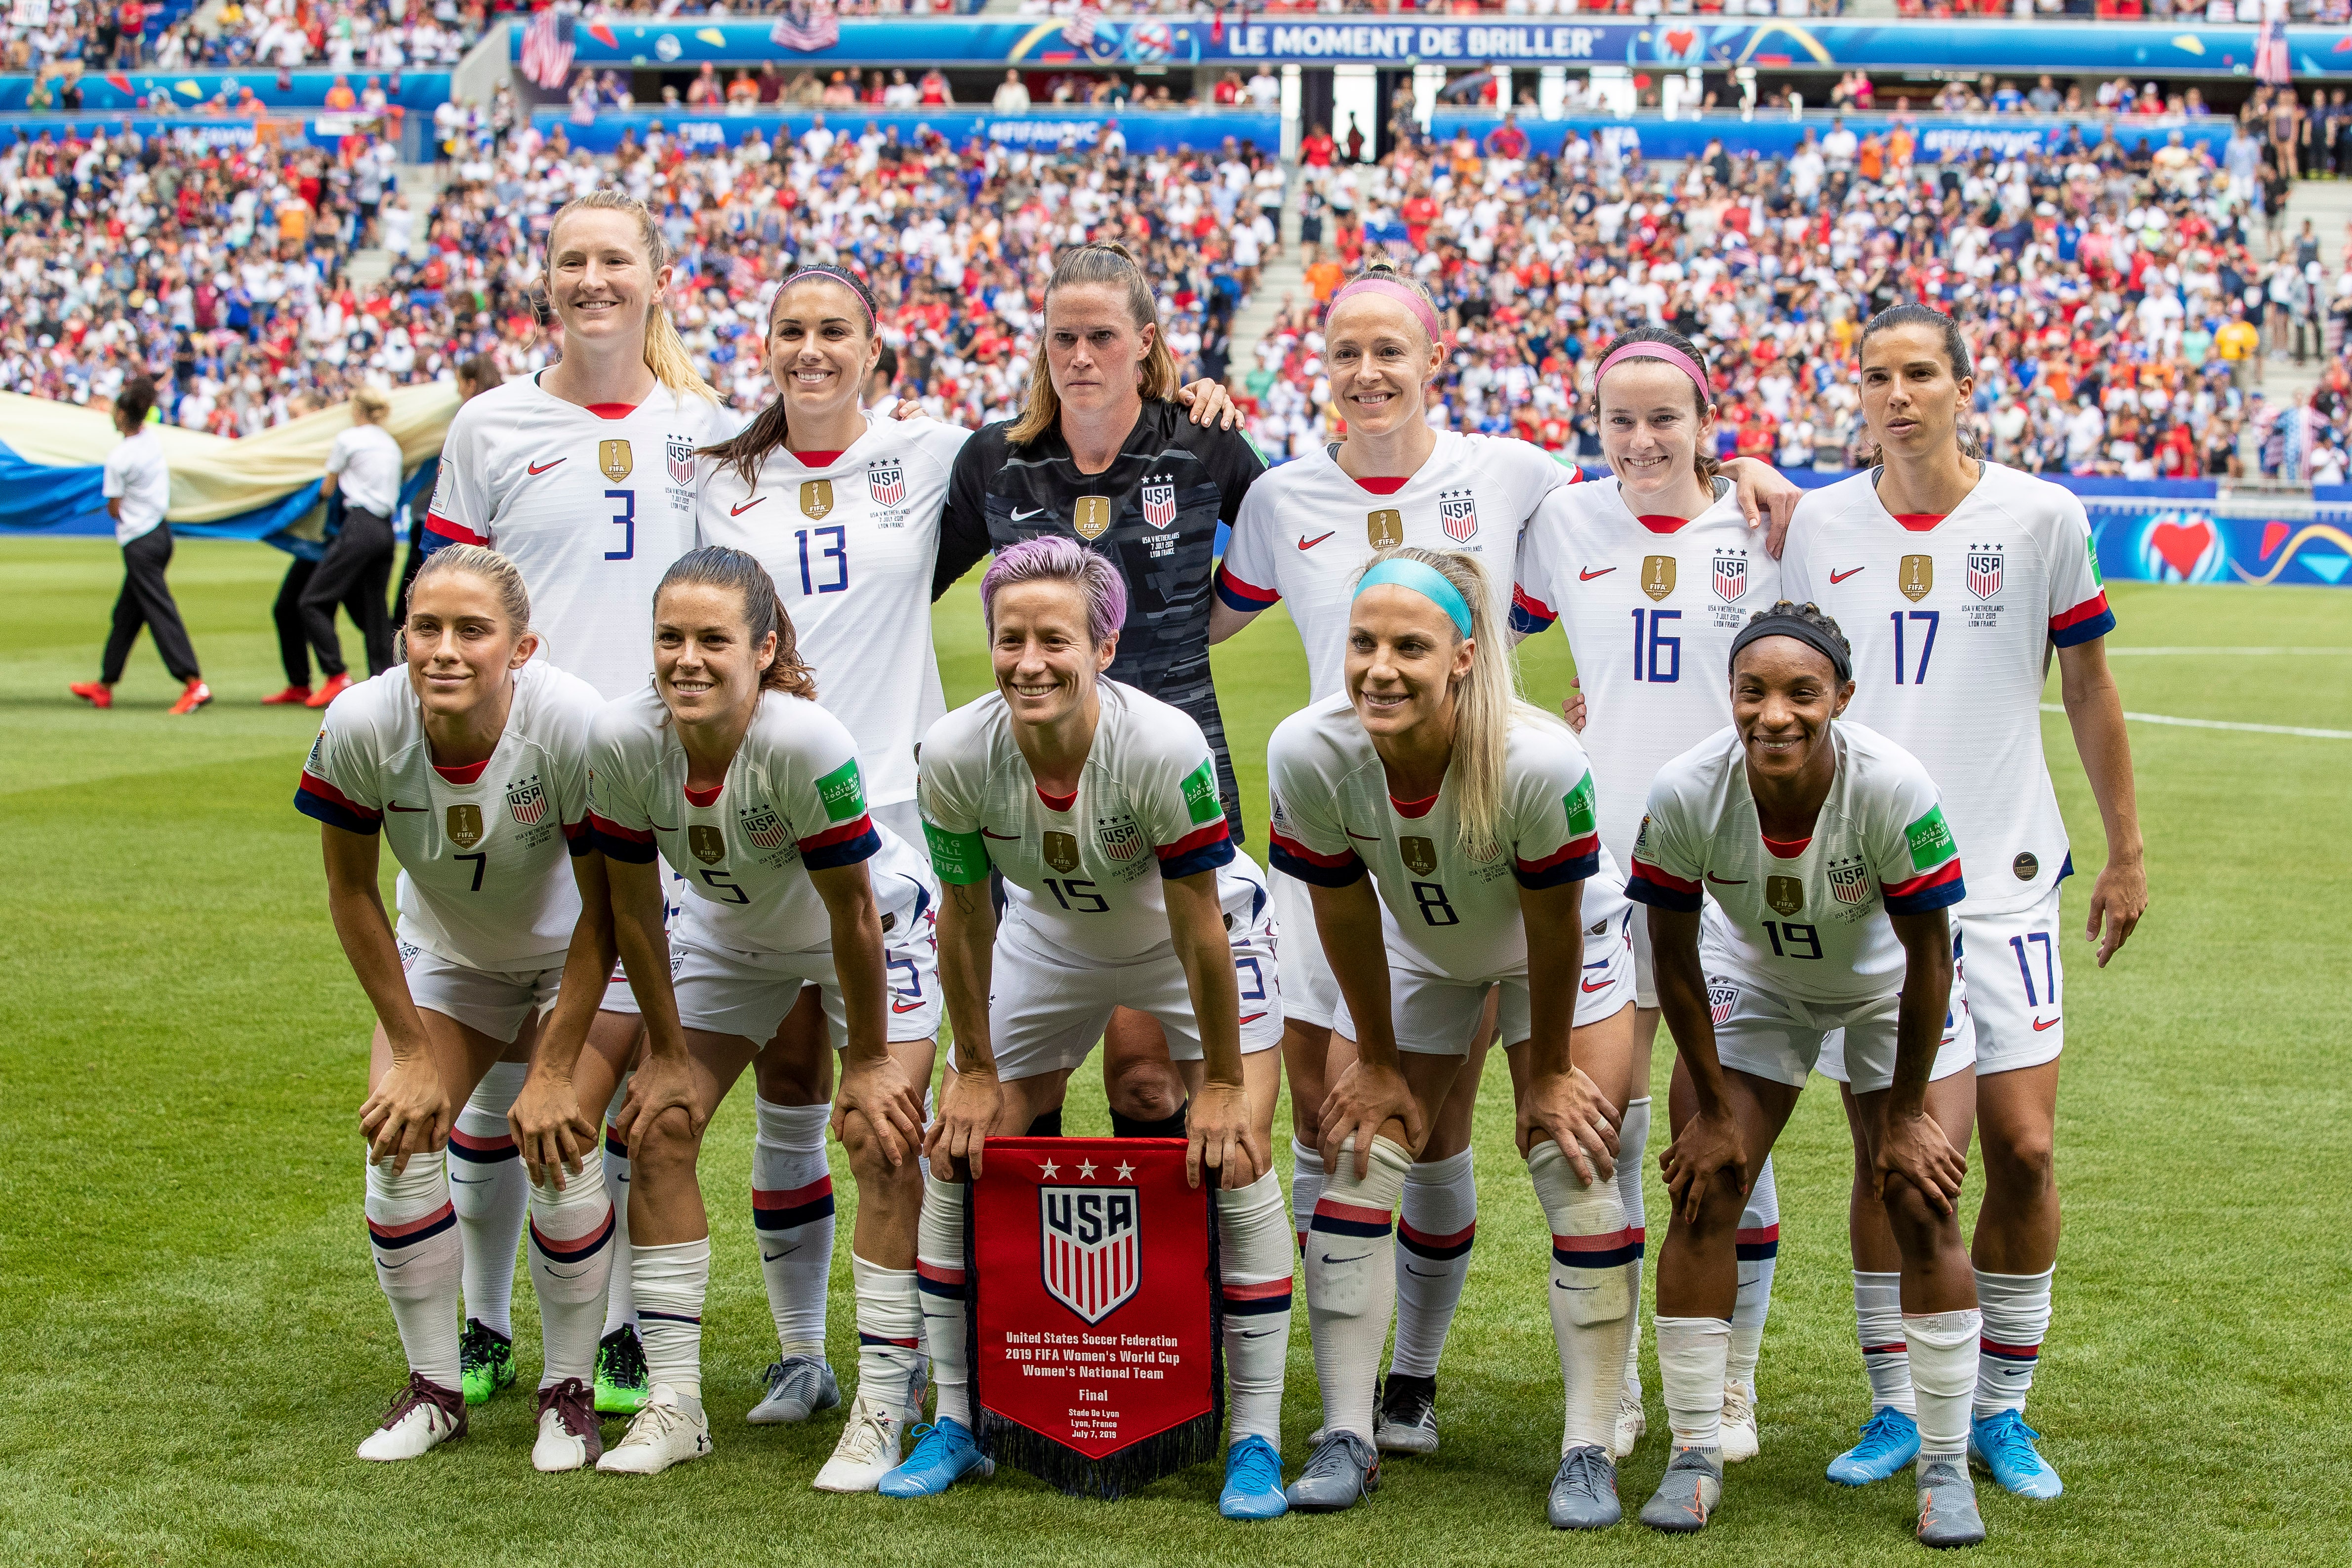 Pay Negotiation Talks Between U.S. Women's Soccer Team and U.S. Soccer Break Down